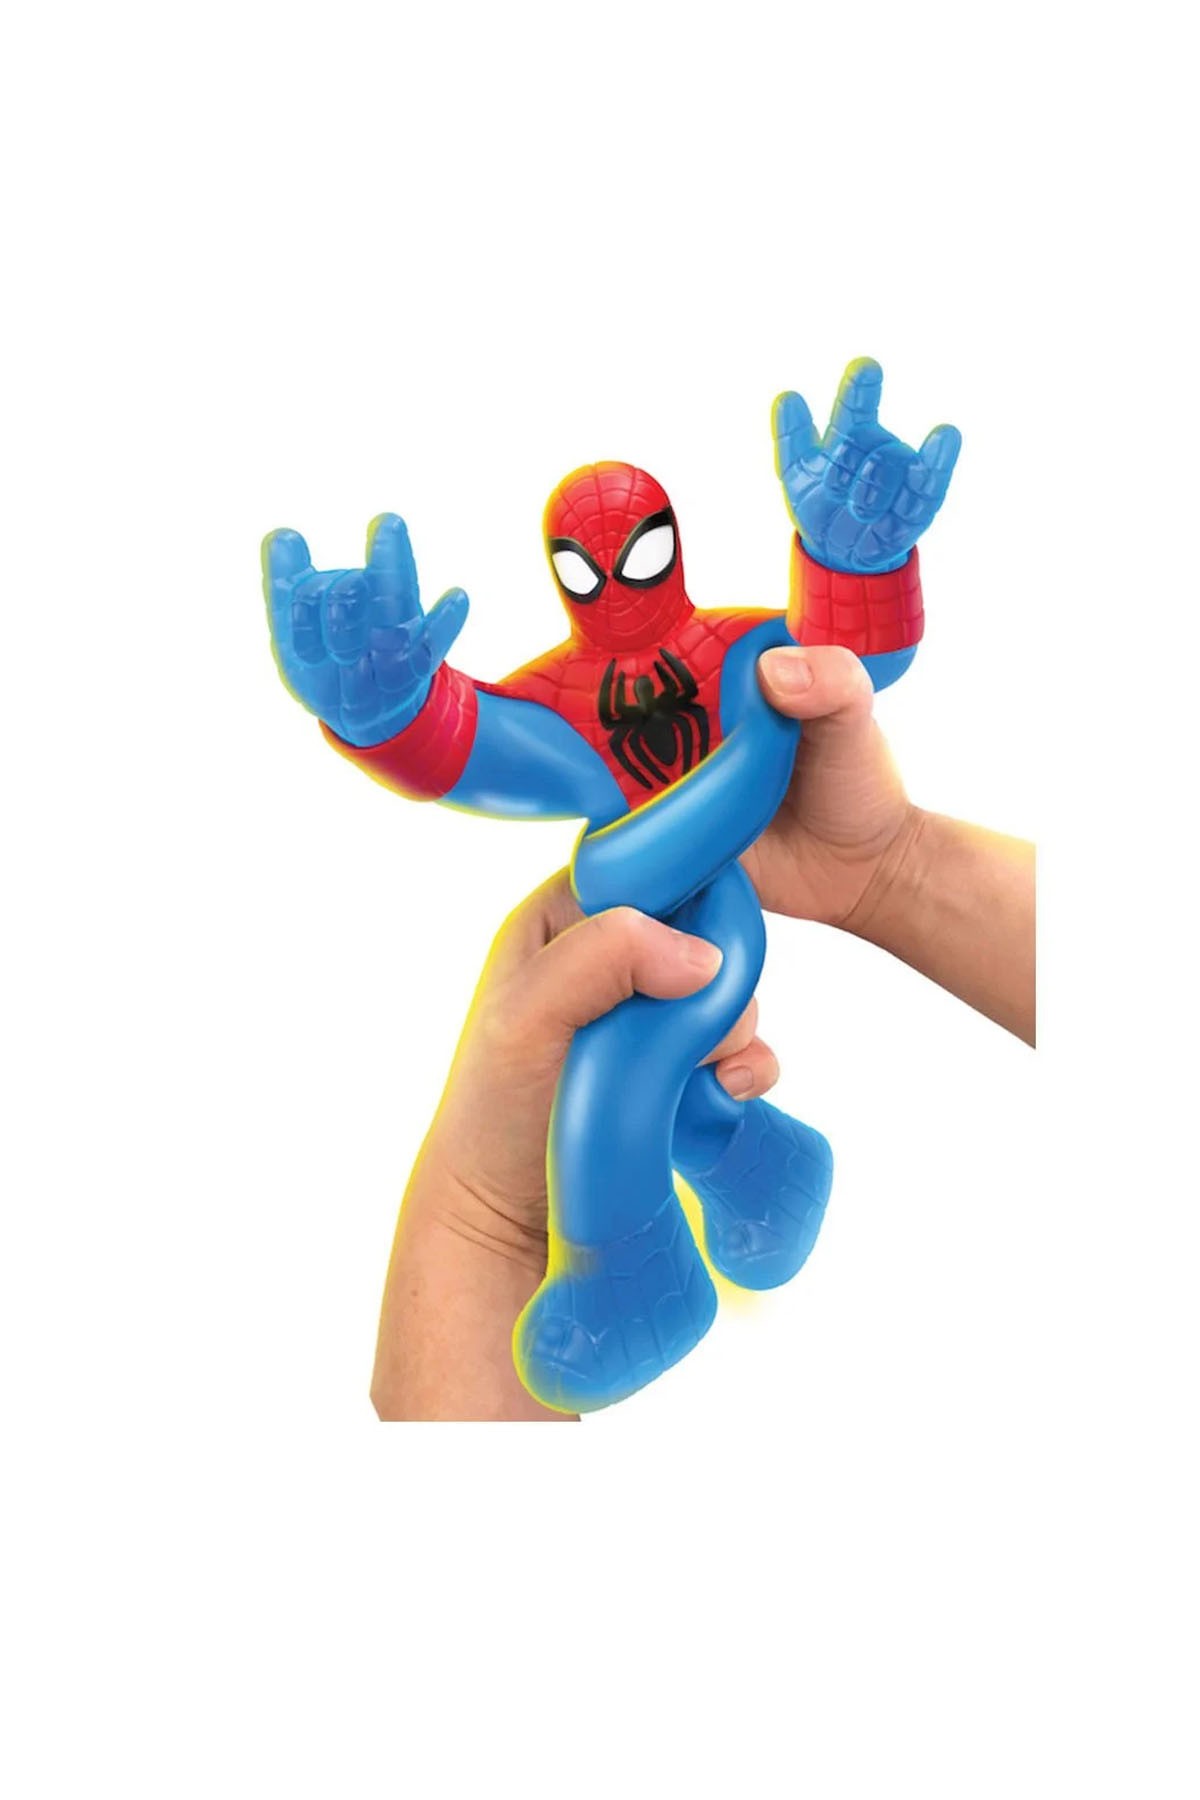 Goojitzu Marvel Goo Shifters Spider Man 42626